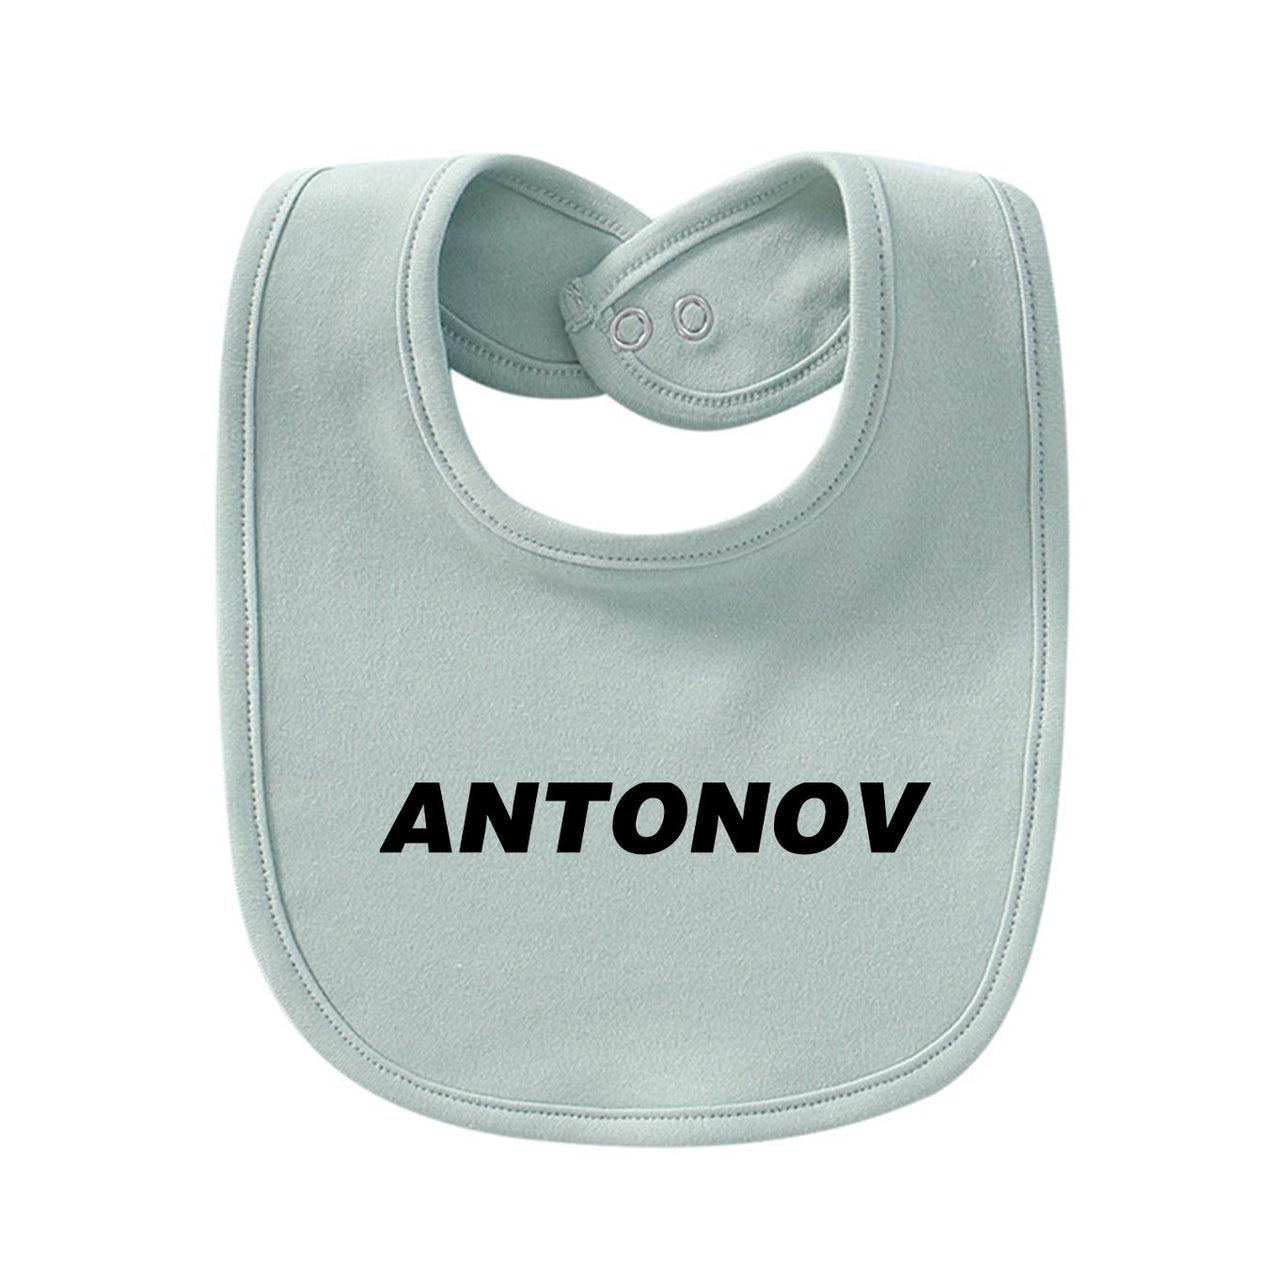 Antonov & Text Designed Baby Saliva & Feeding Towels